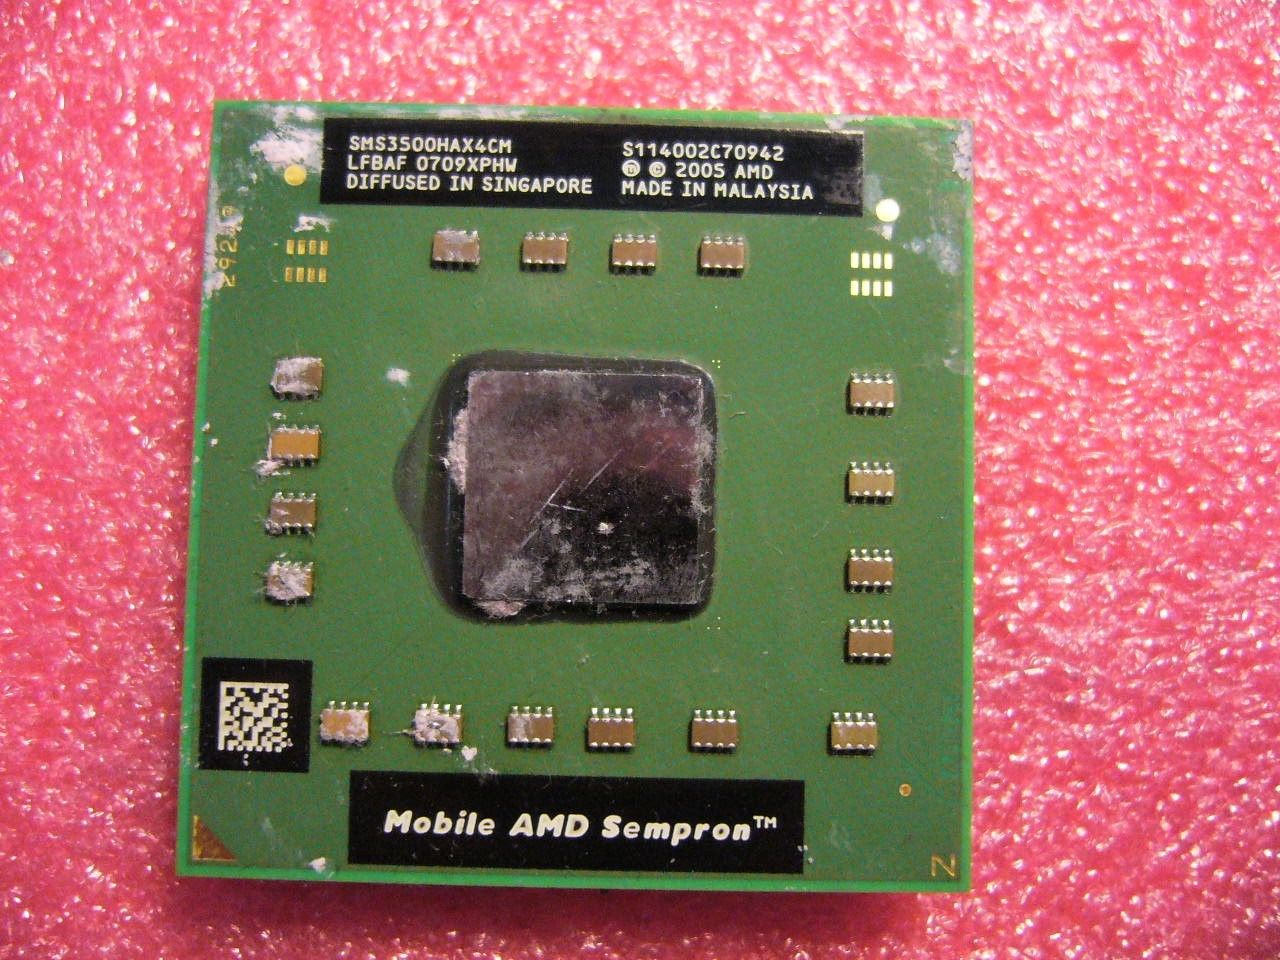 QTY 1x AMD Mobile Sempron 3500+ 1.8 GHz (SMS3500HAX4CM) CPU Socket S1